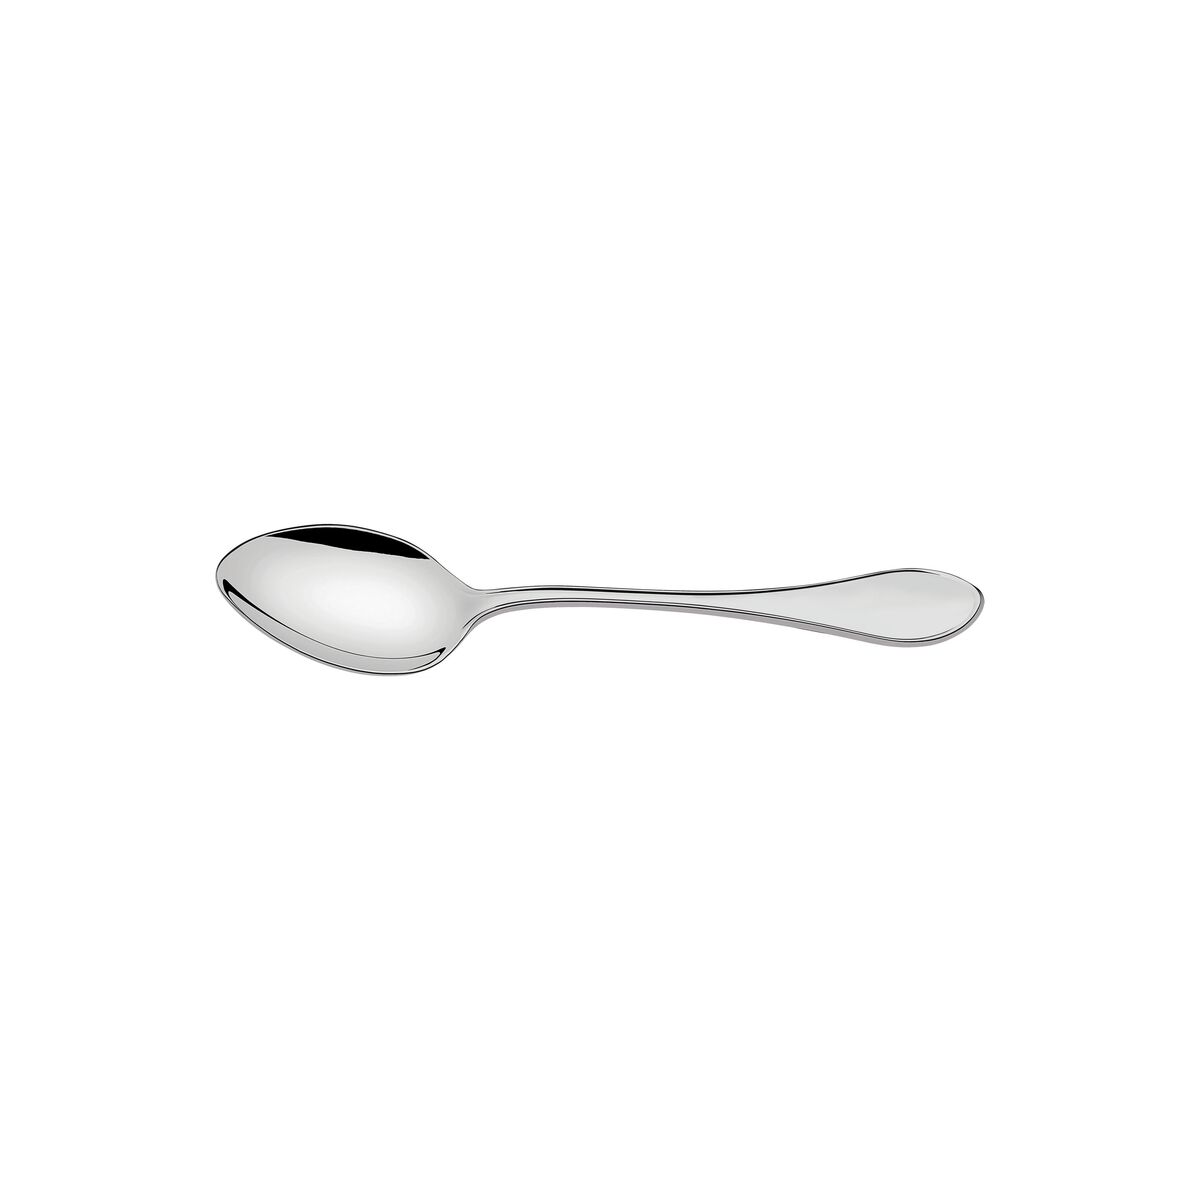 Tramontina Italy stainless steel dessert spoon